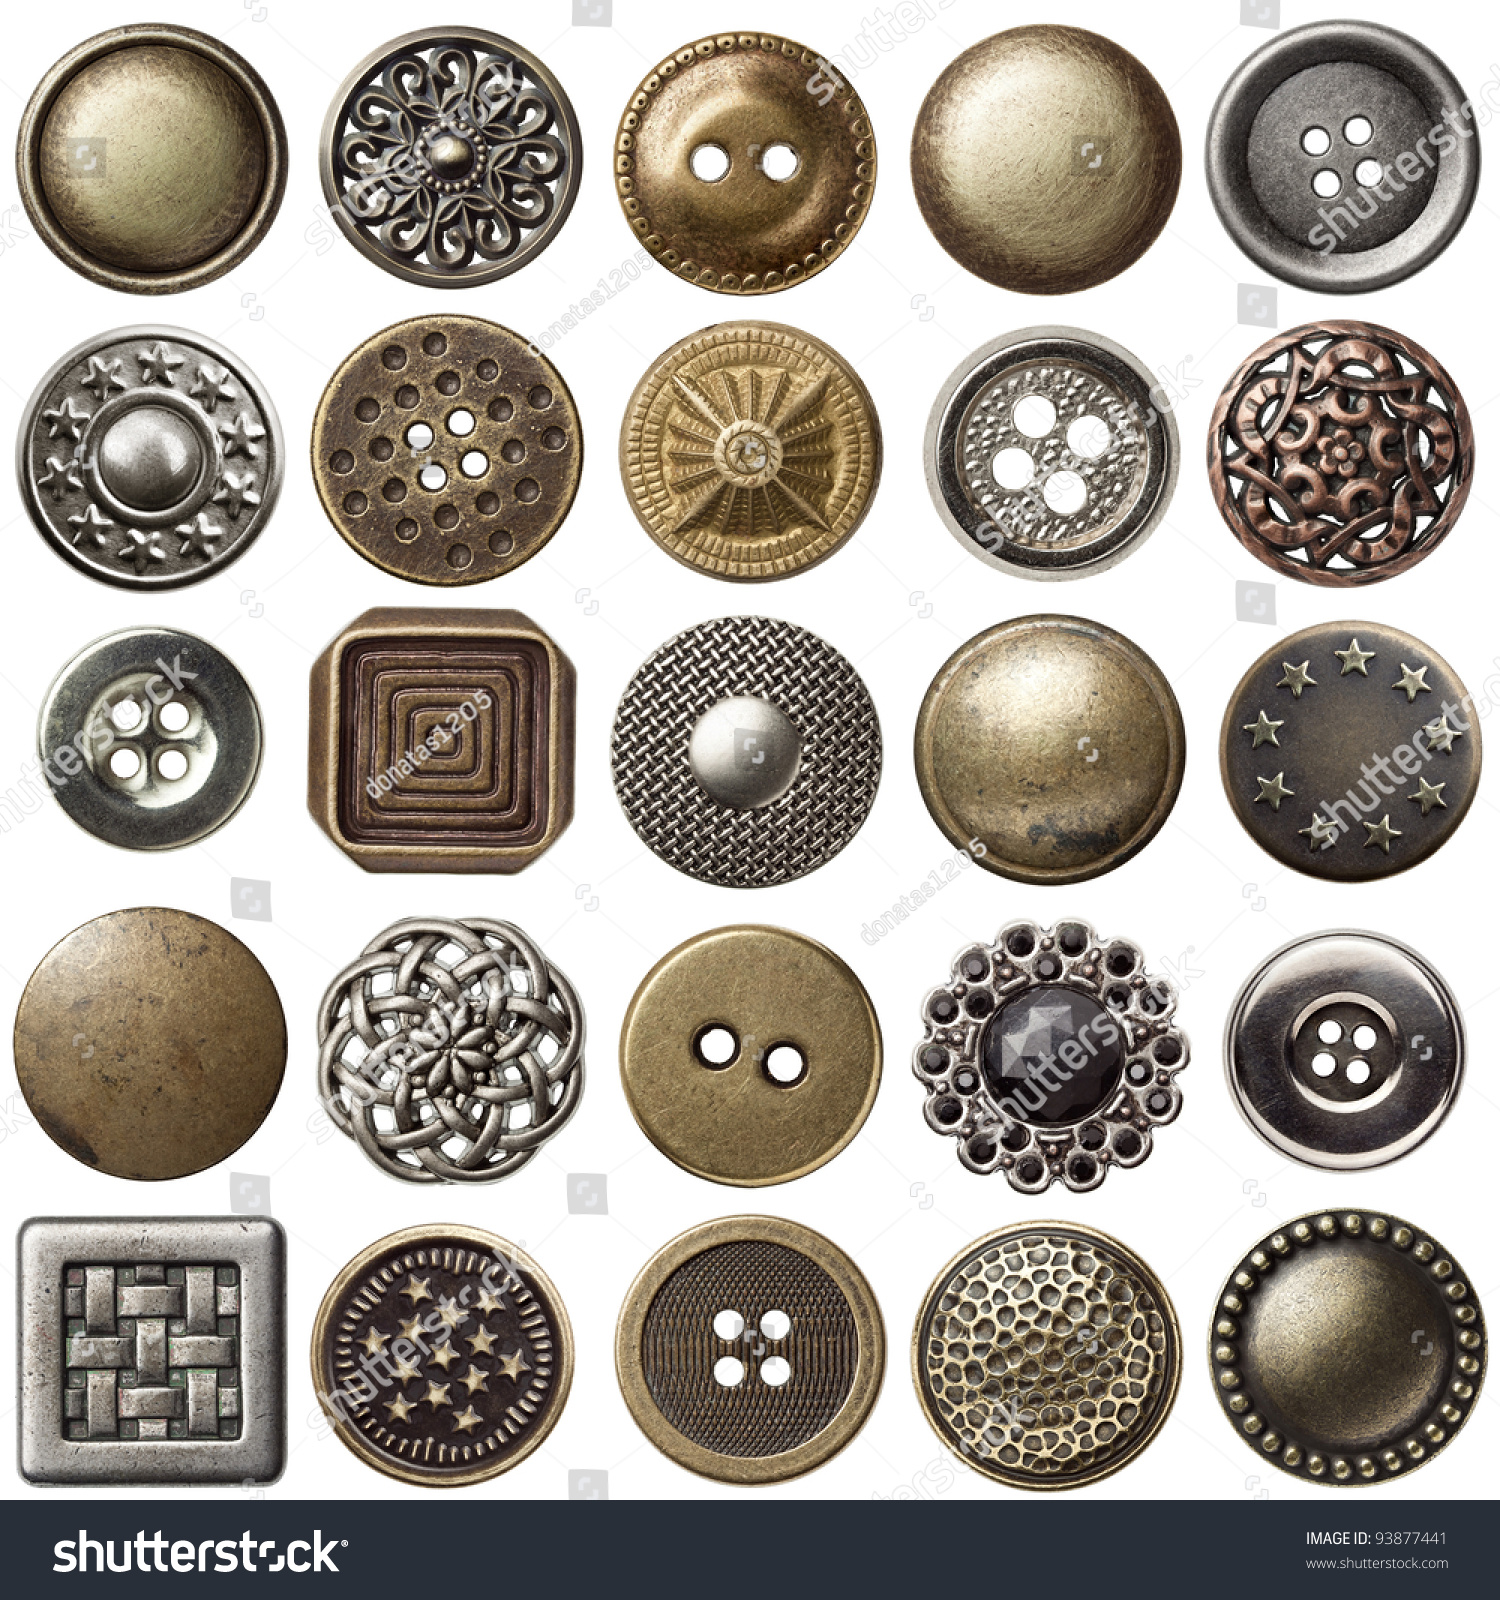 Vintage Button Collection 81